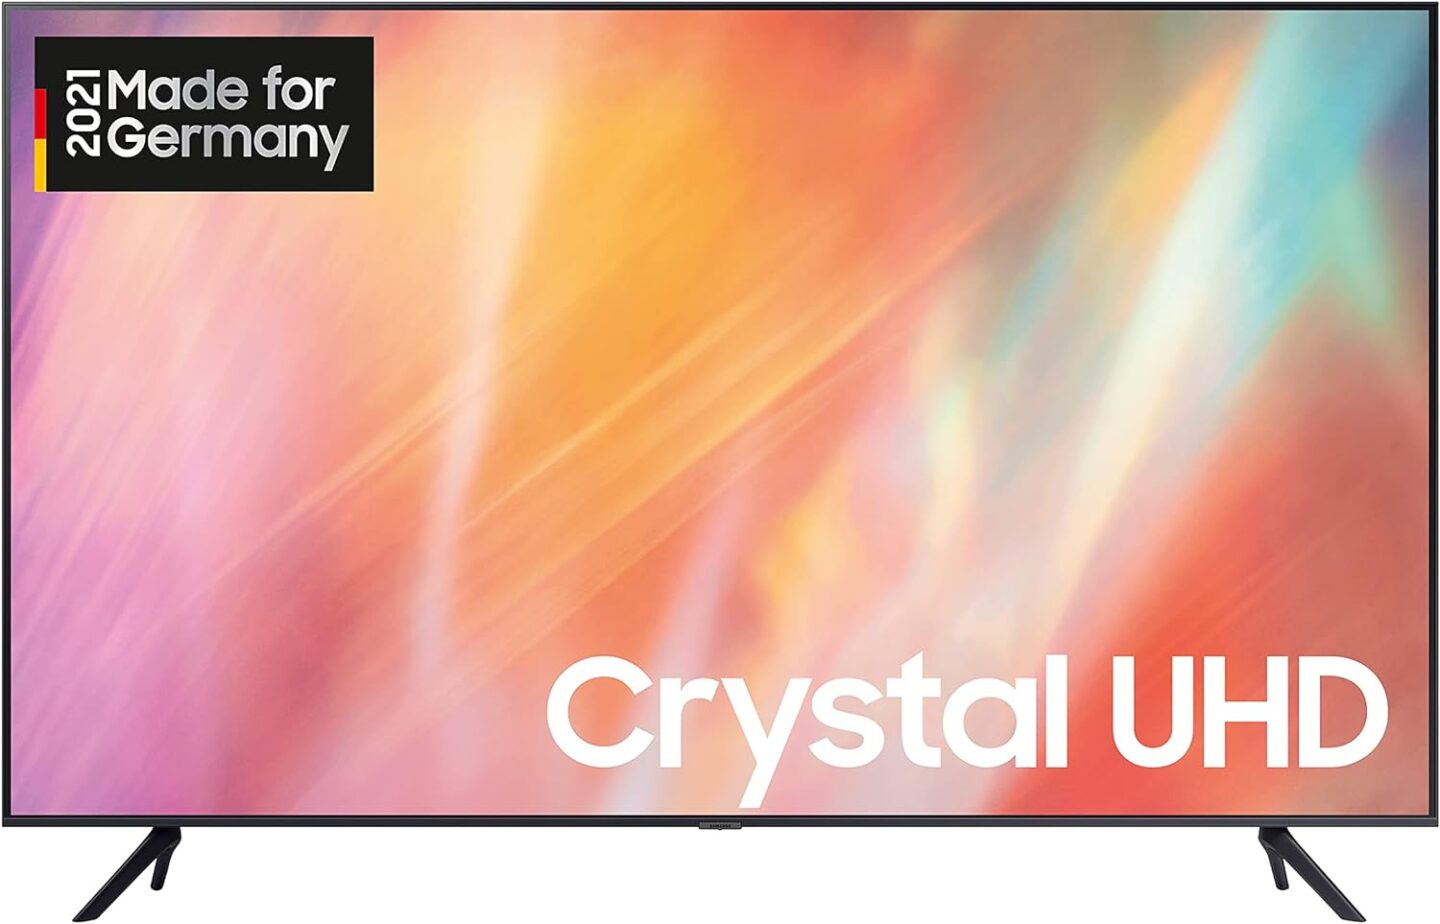 Samsung Crystal UHD 4K TV 55 Zoll GU55AU7179UXZG